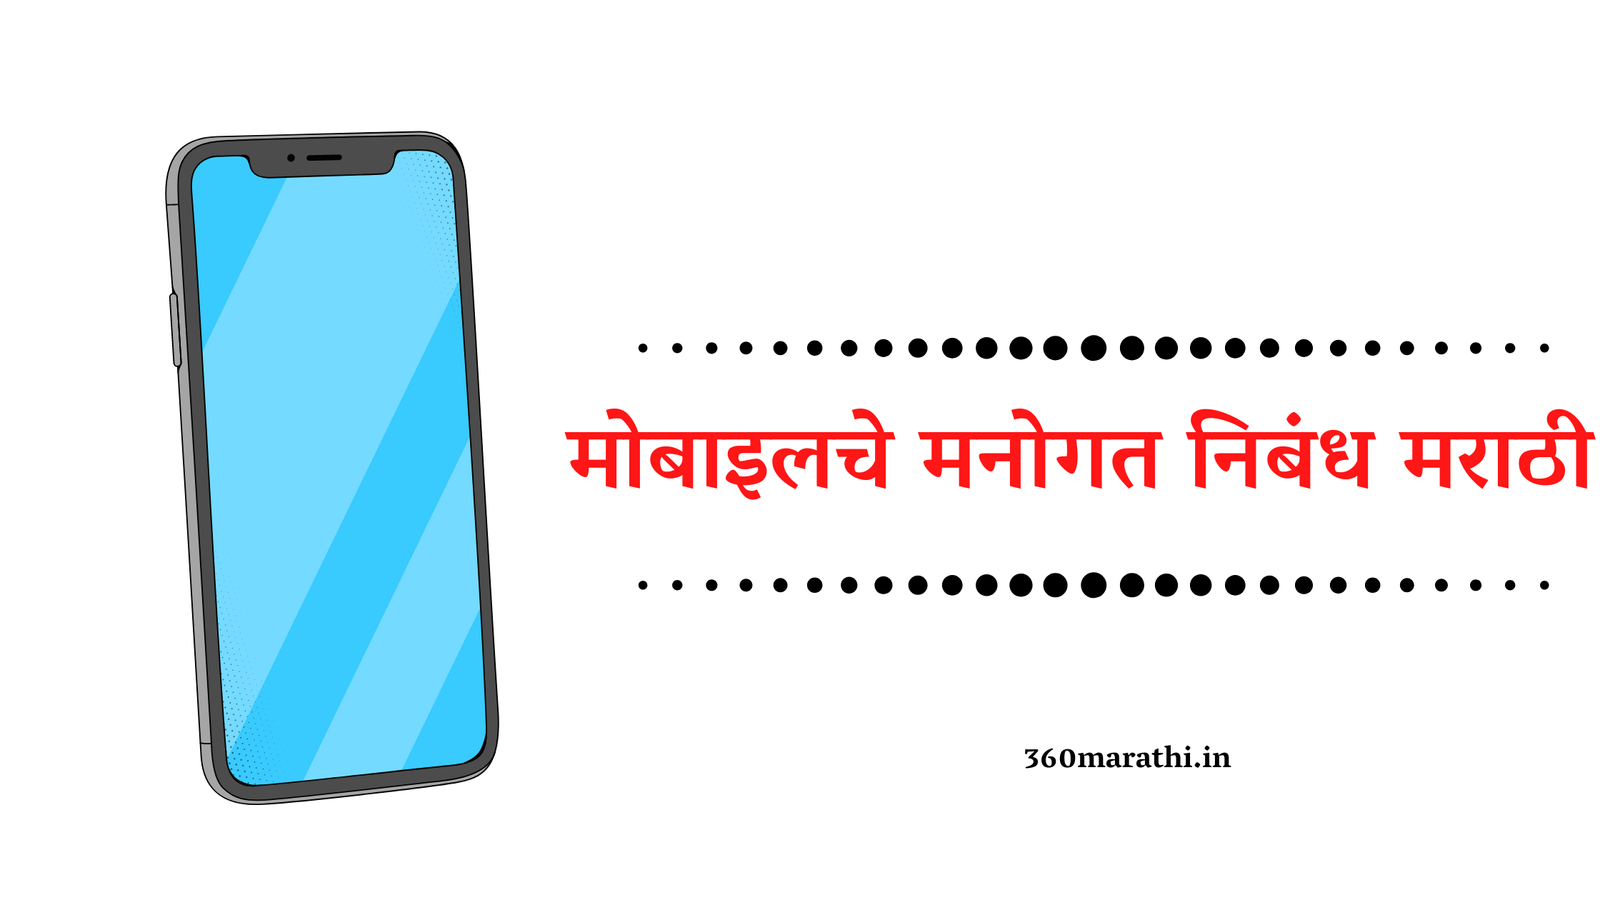 मोबाइलचे मनोगत / आत्मकथा निबंध मराठी | Mobile Essay in Marathi